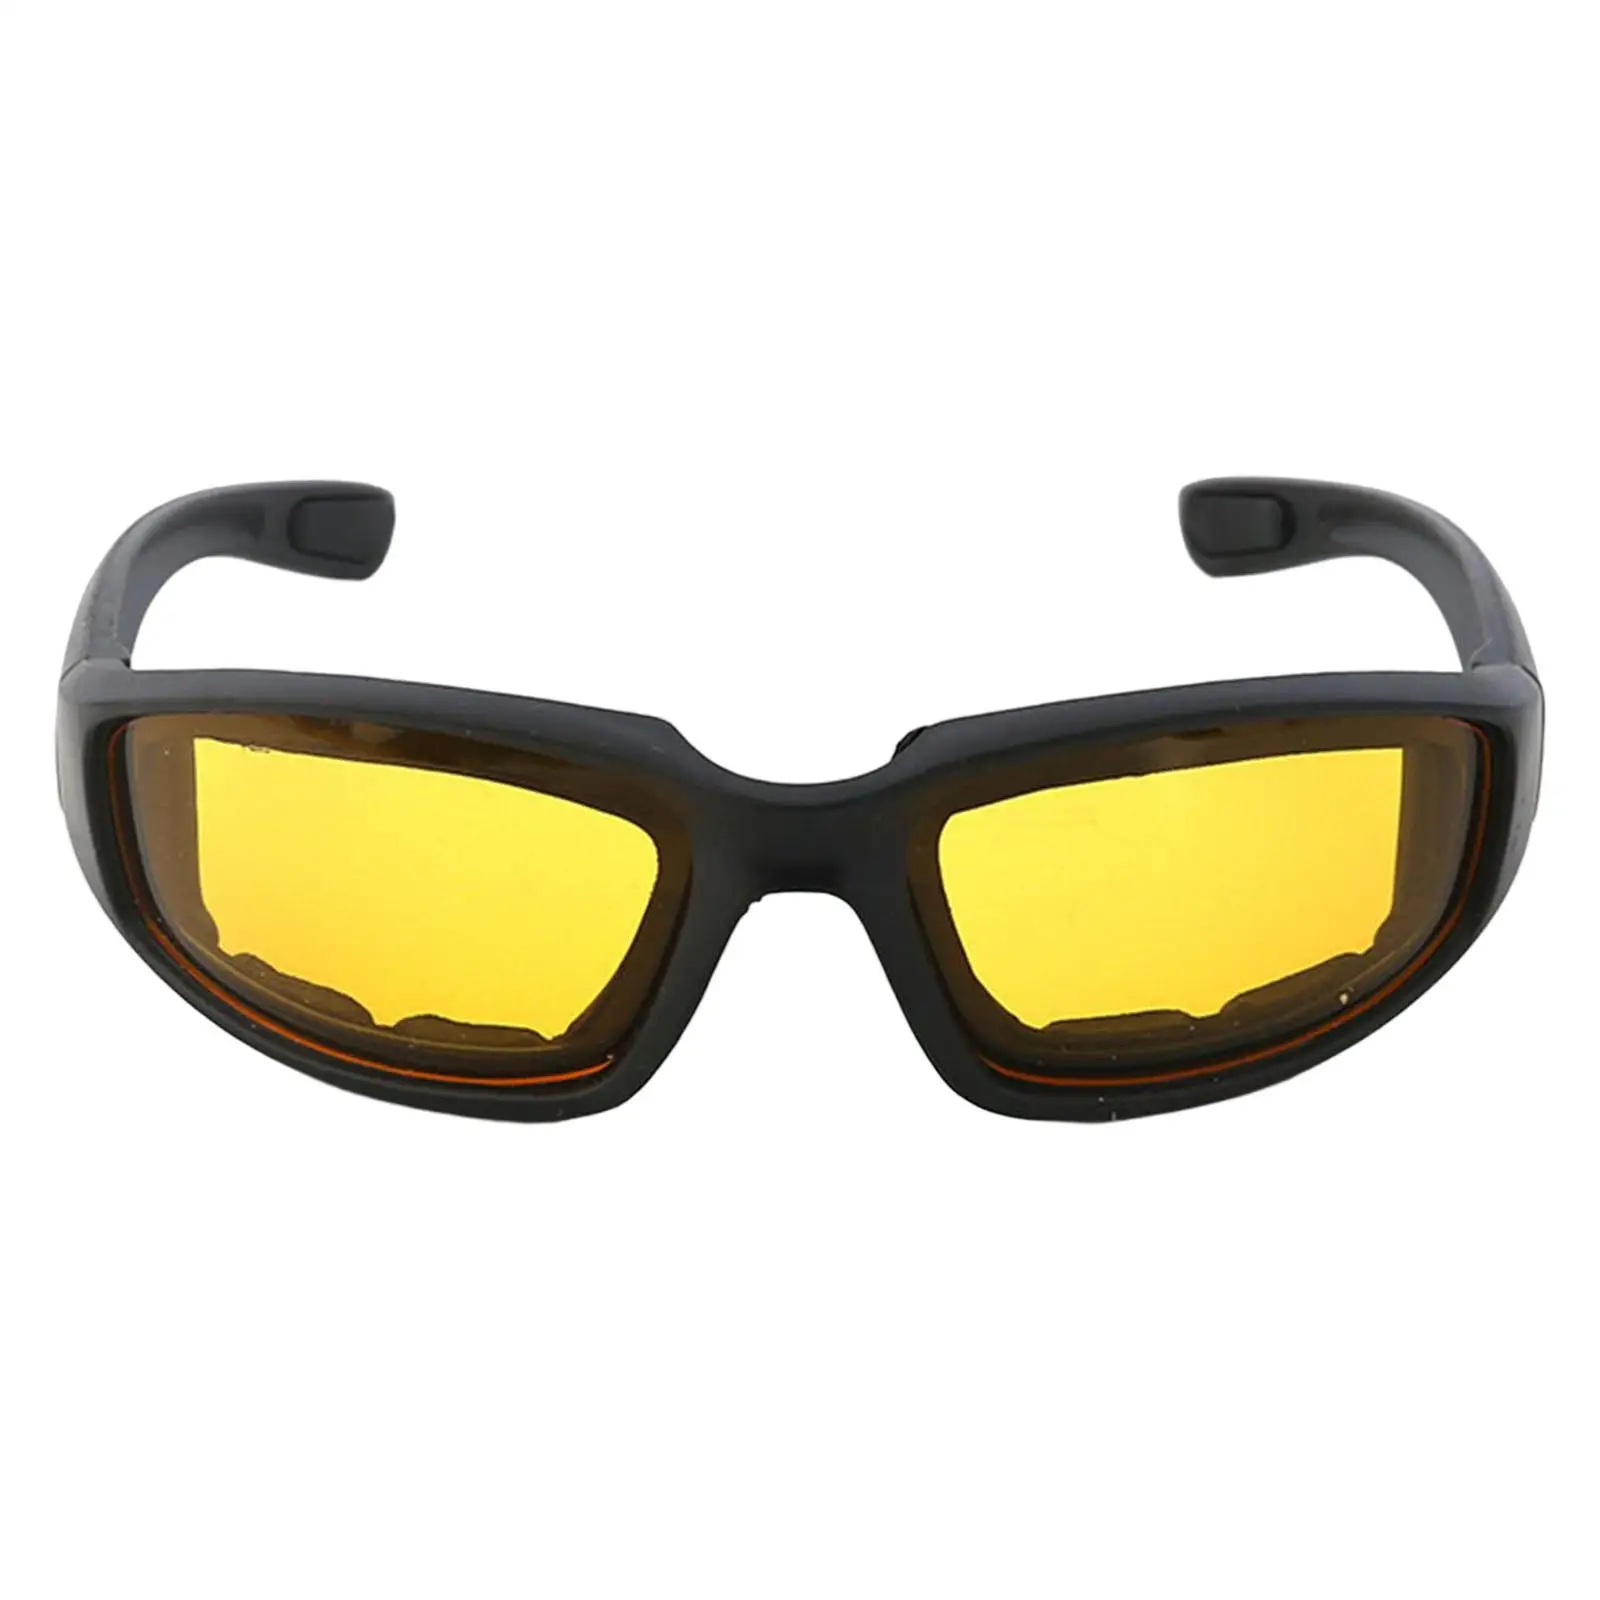 Motorcycle Riding Goggles Cycling Glasses Eye Protector Eyewear Sponge Frame for Fishing Women Men Baseball Golf Driving